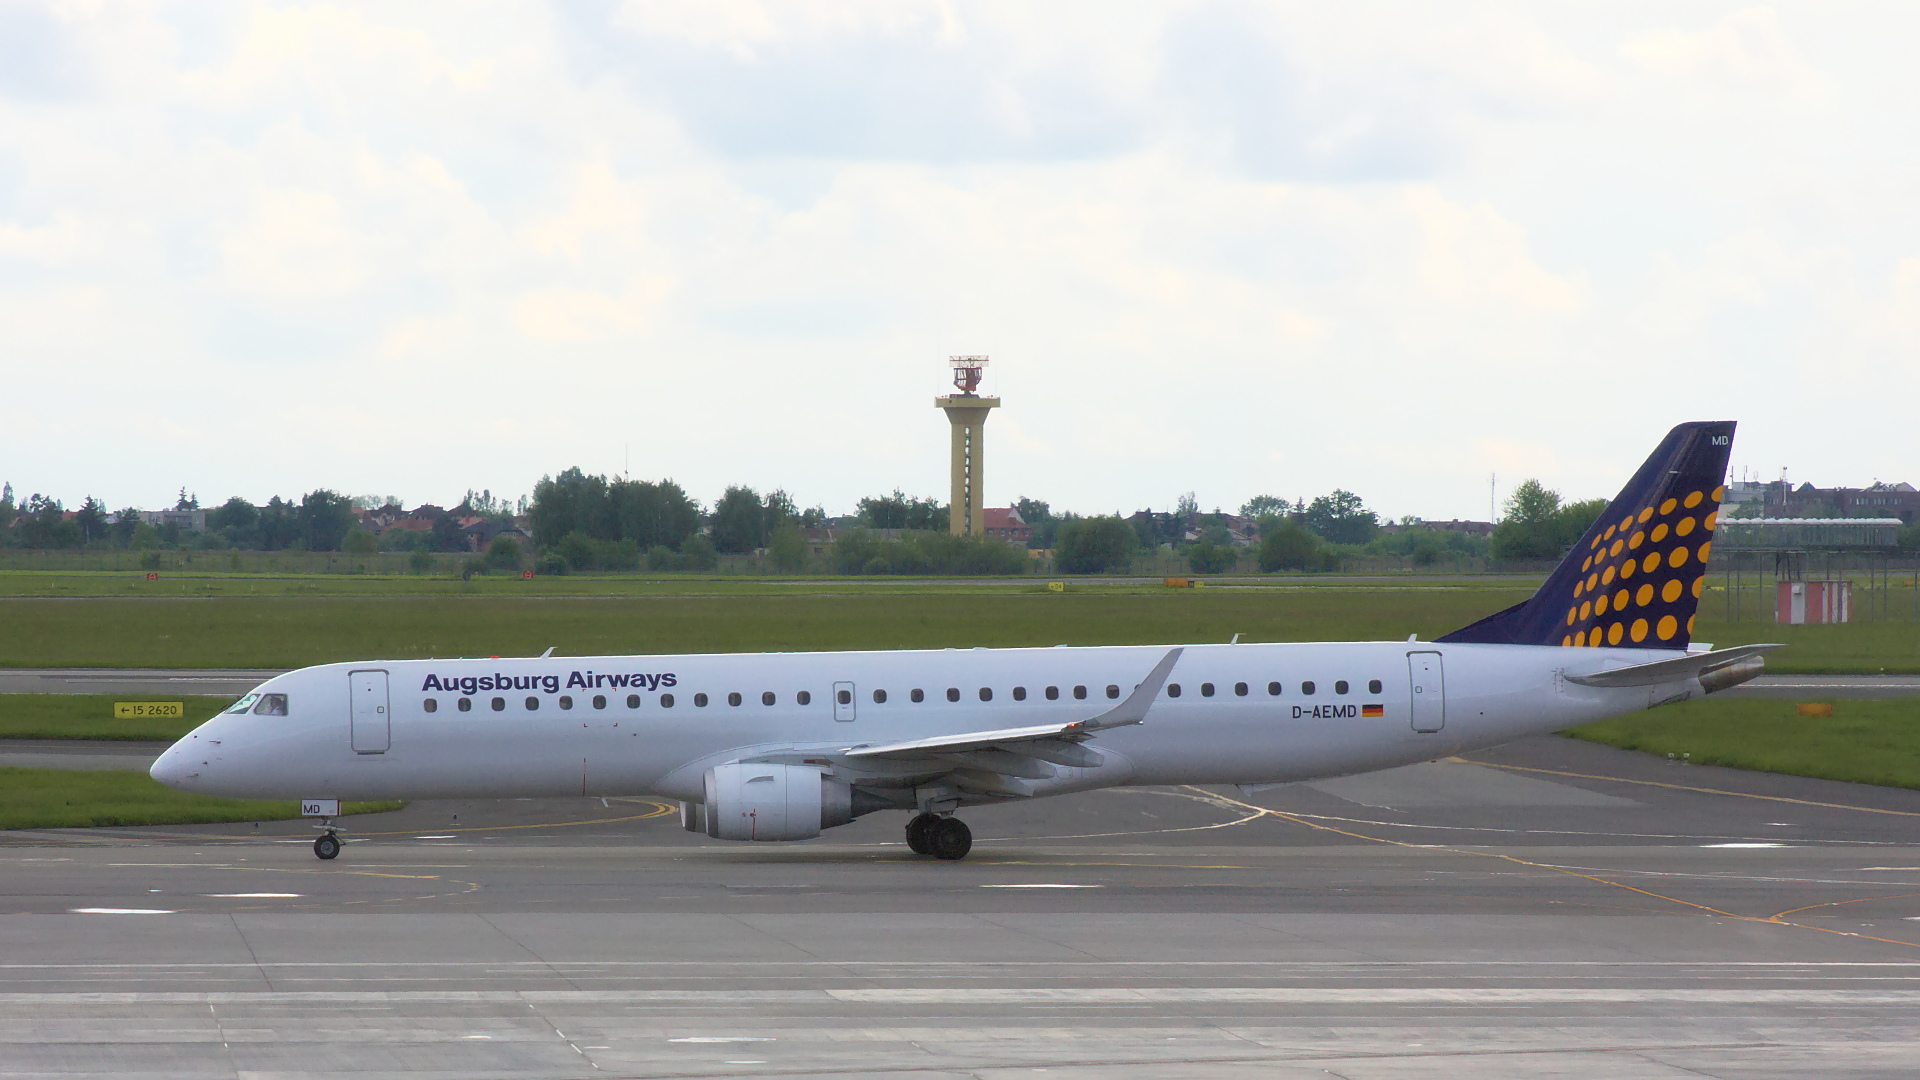 D-AEMD ✈ Augsburg Airways Embraer ERJ-195LR @ Warsaw-Chopin